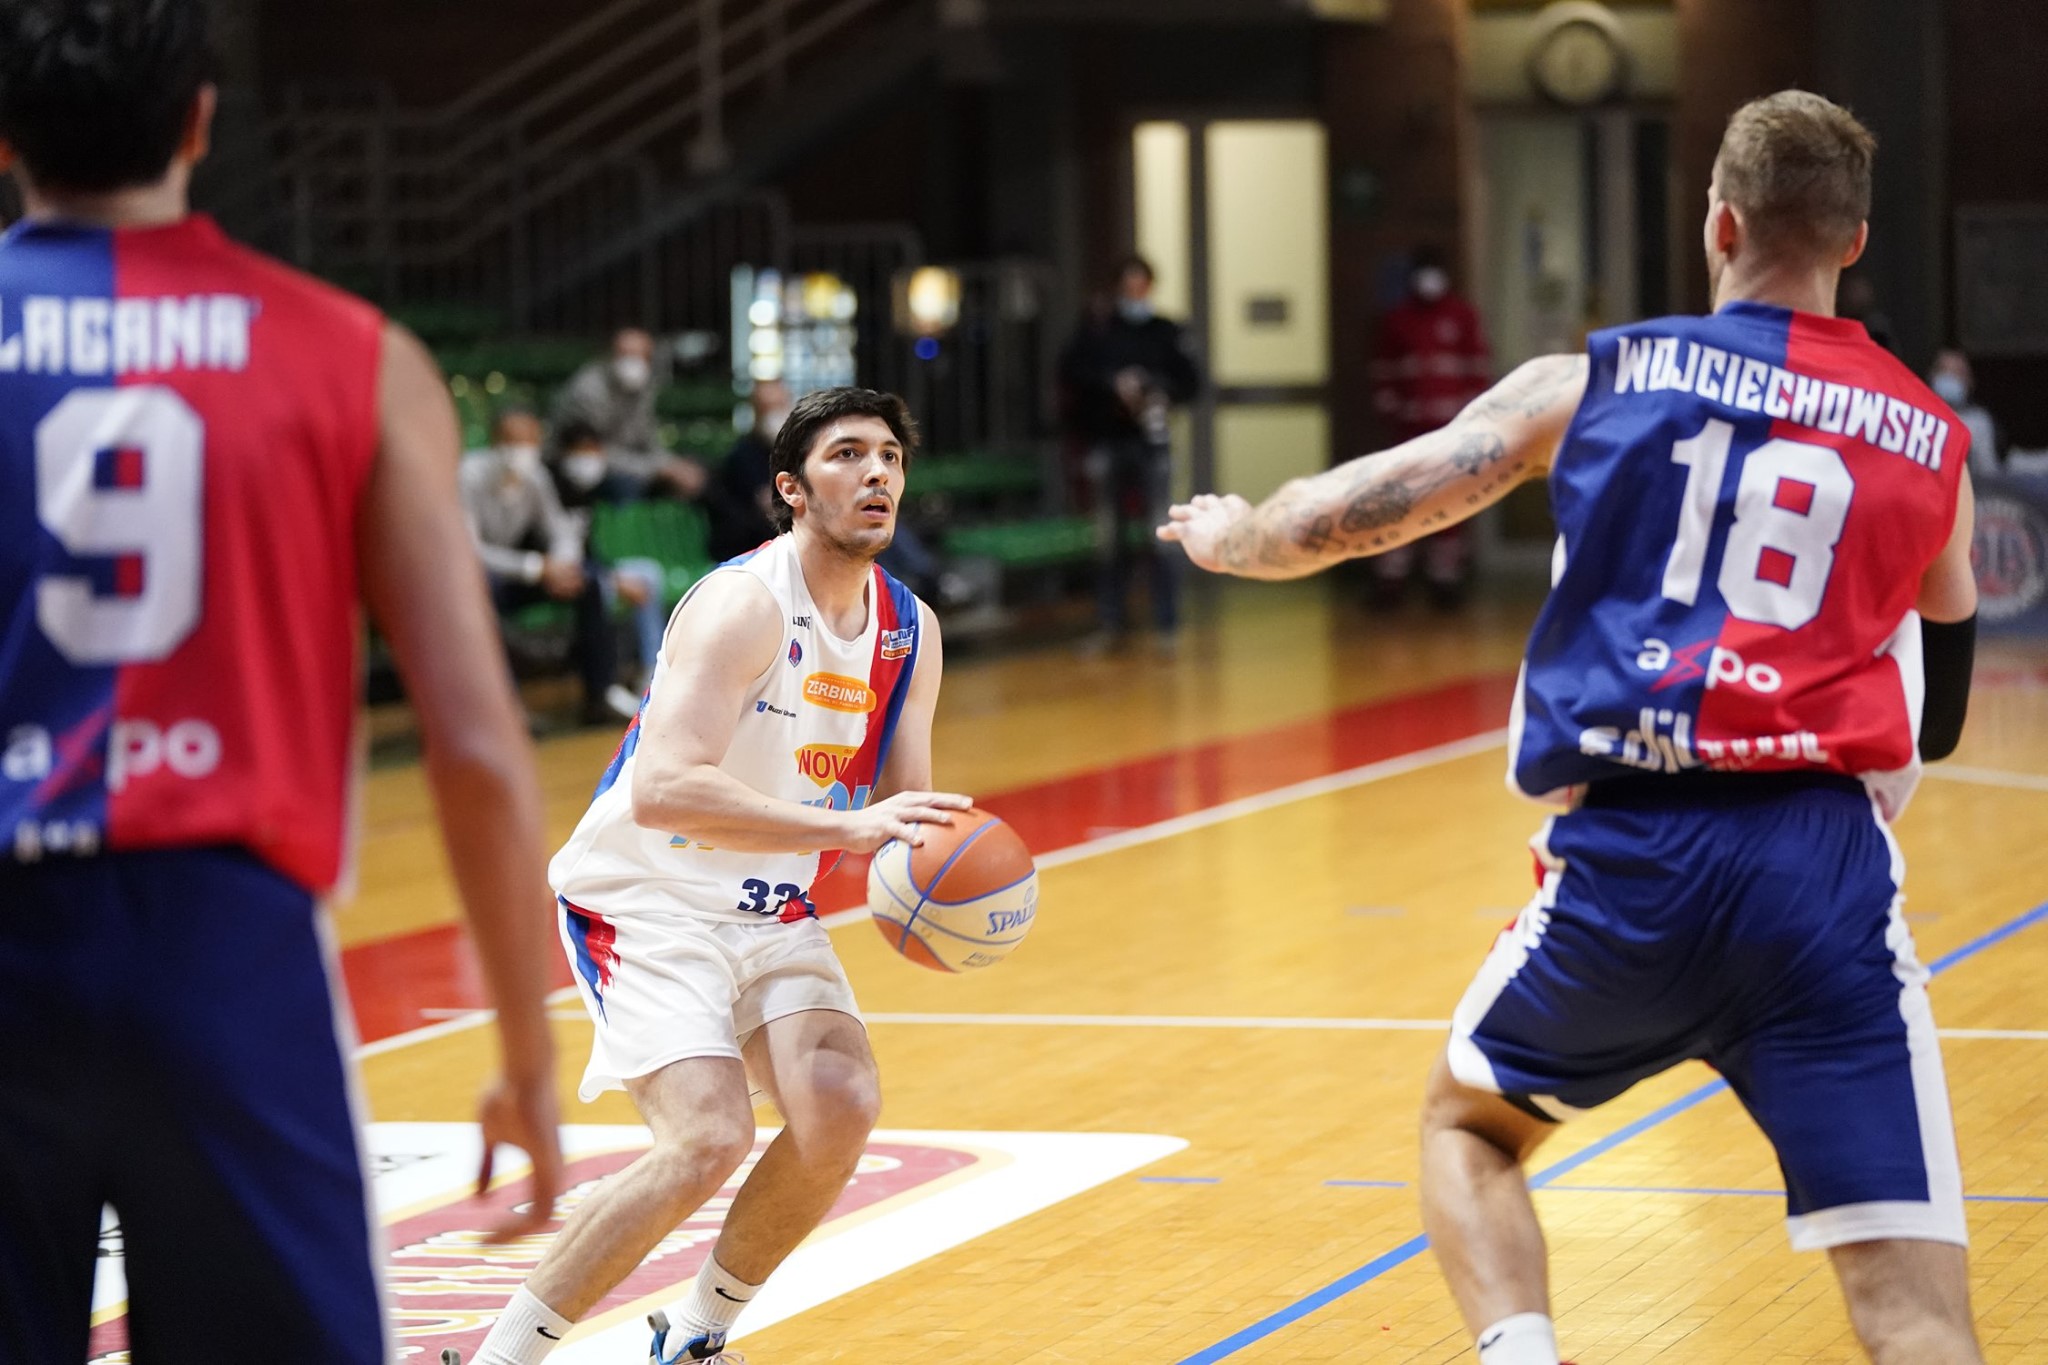 Basket: trasferta a Verona per la Novipiù JB Monferrato